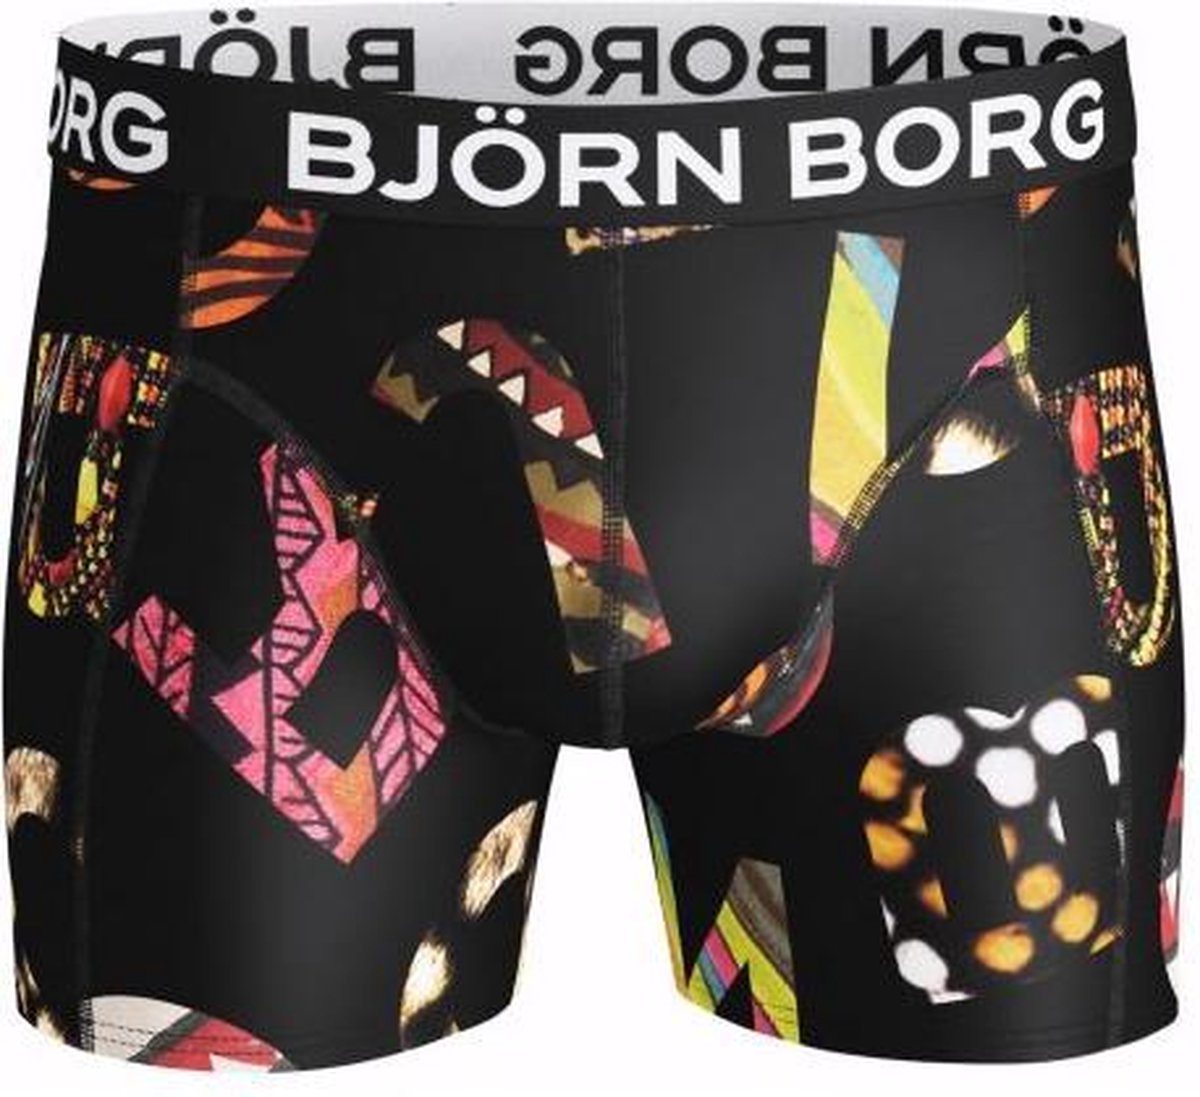 Bjorn Borg Boxershorts Microfiber Sale Online, SAVE 49% - cocoguate.com